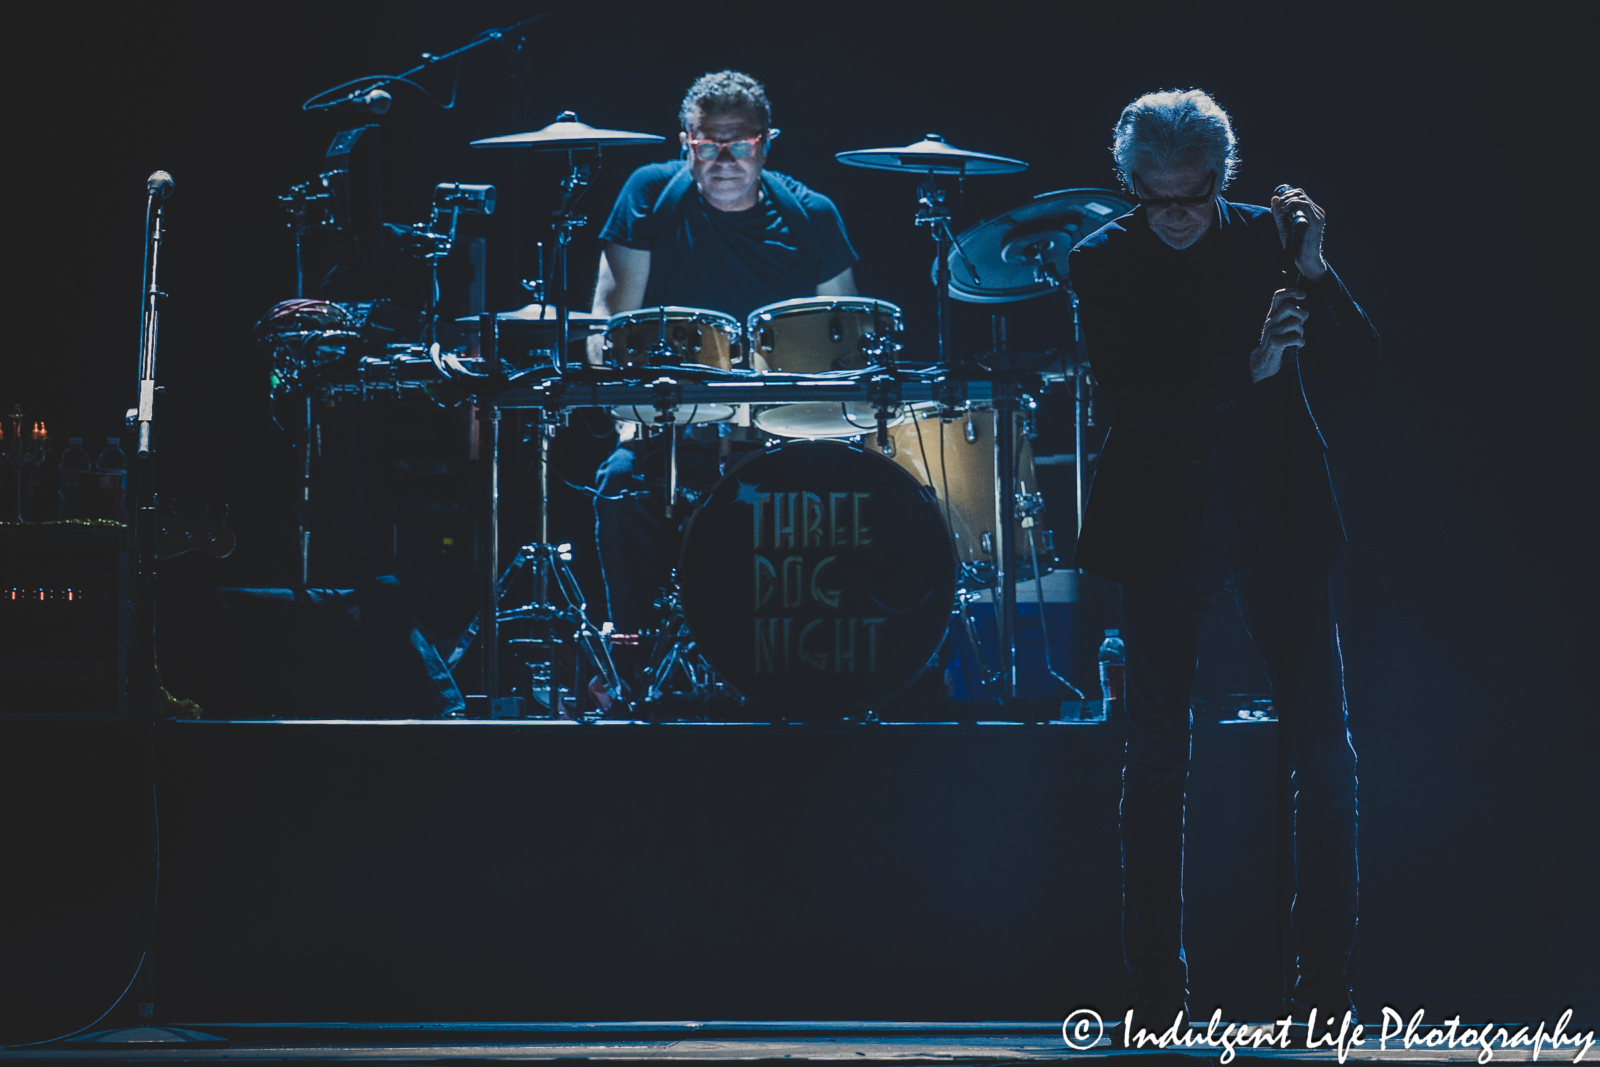 Three Dog Night founding member Danny Hutton and drummer Pat Bautz live at Ameristar Casino in Kansas City, MO on September 29, 2023.